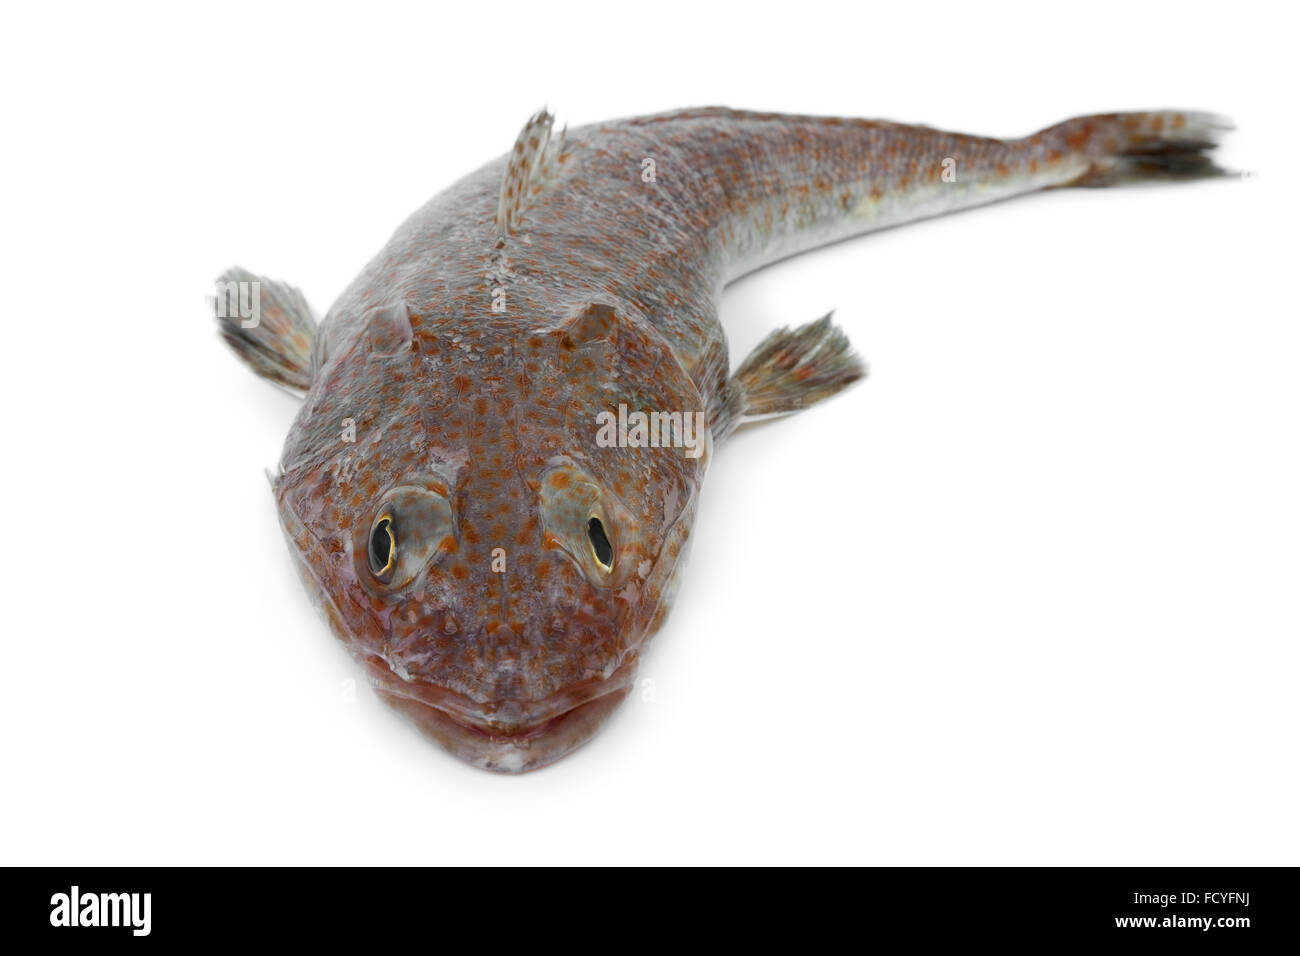 Australian fresh raw flathead fish on white background Stock Photo